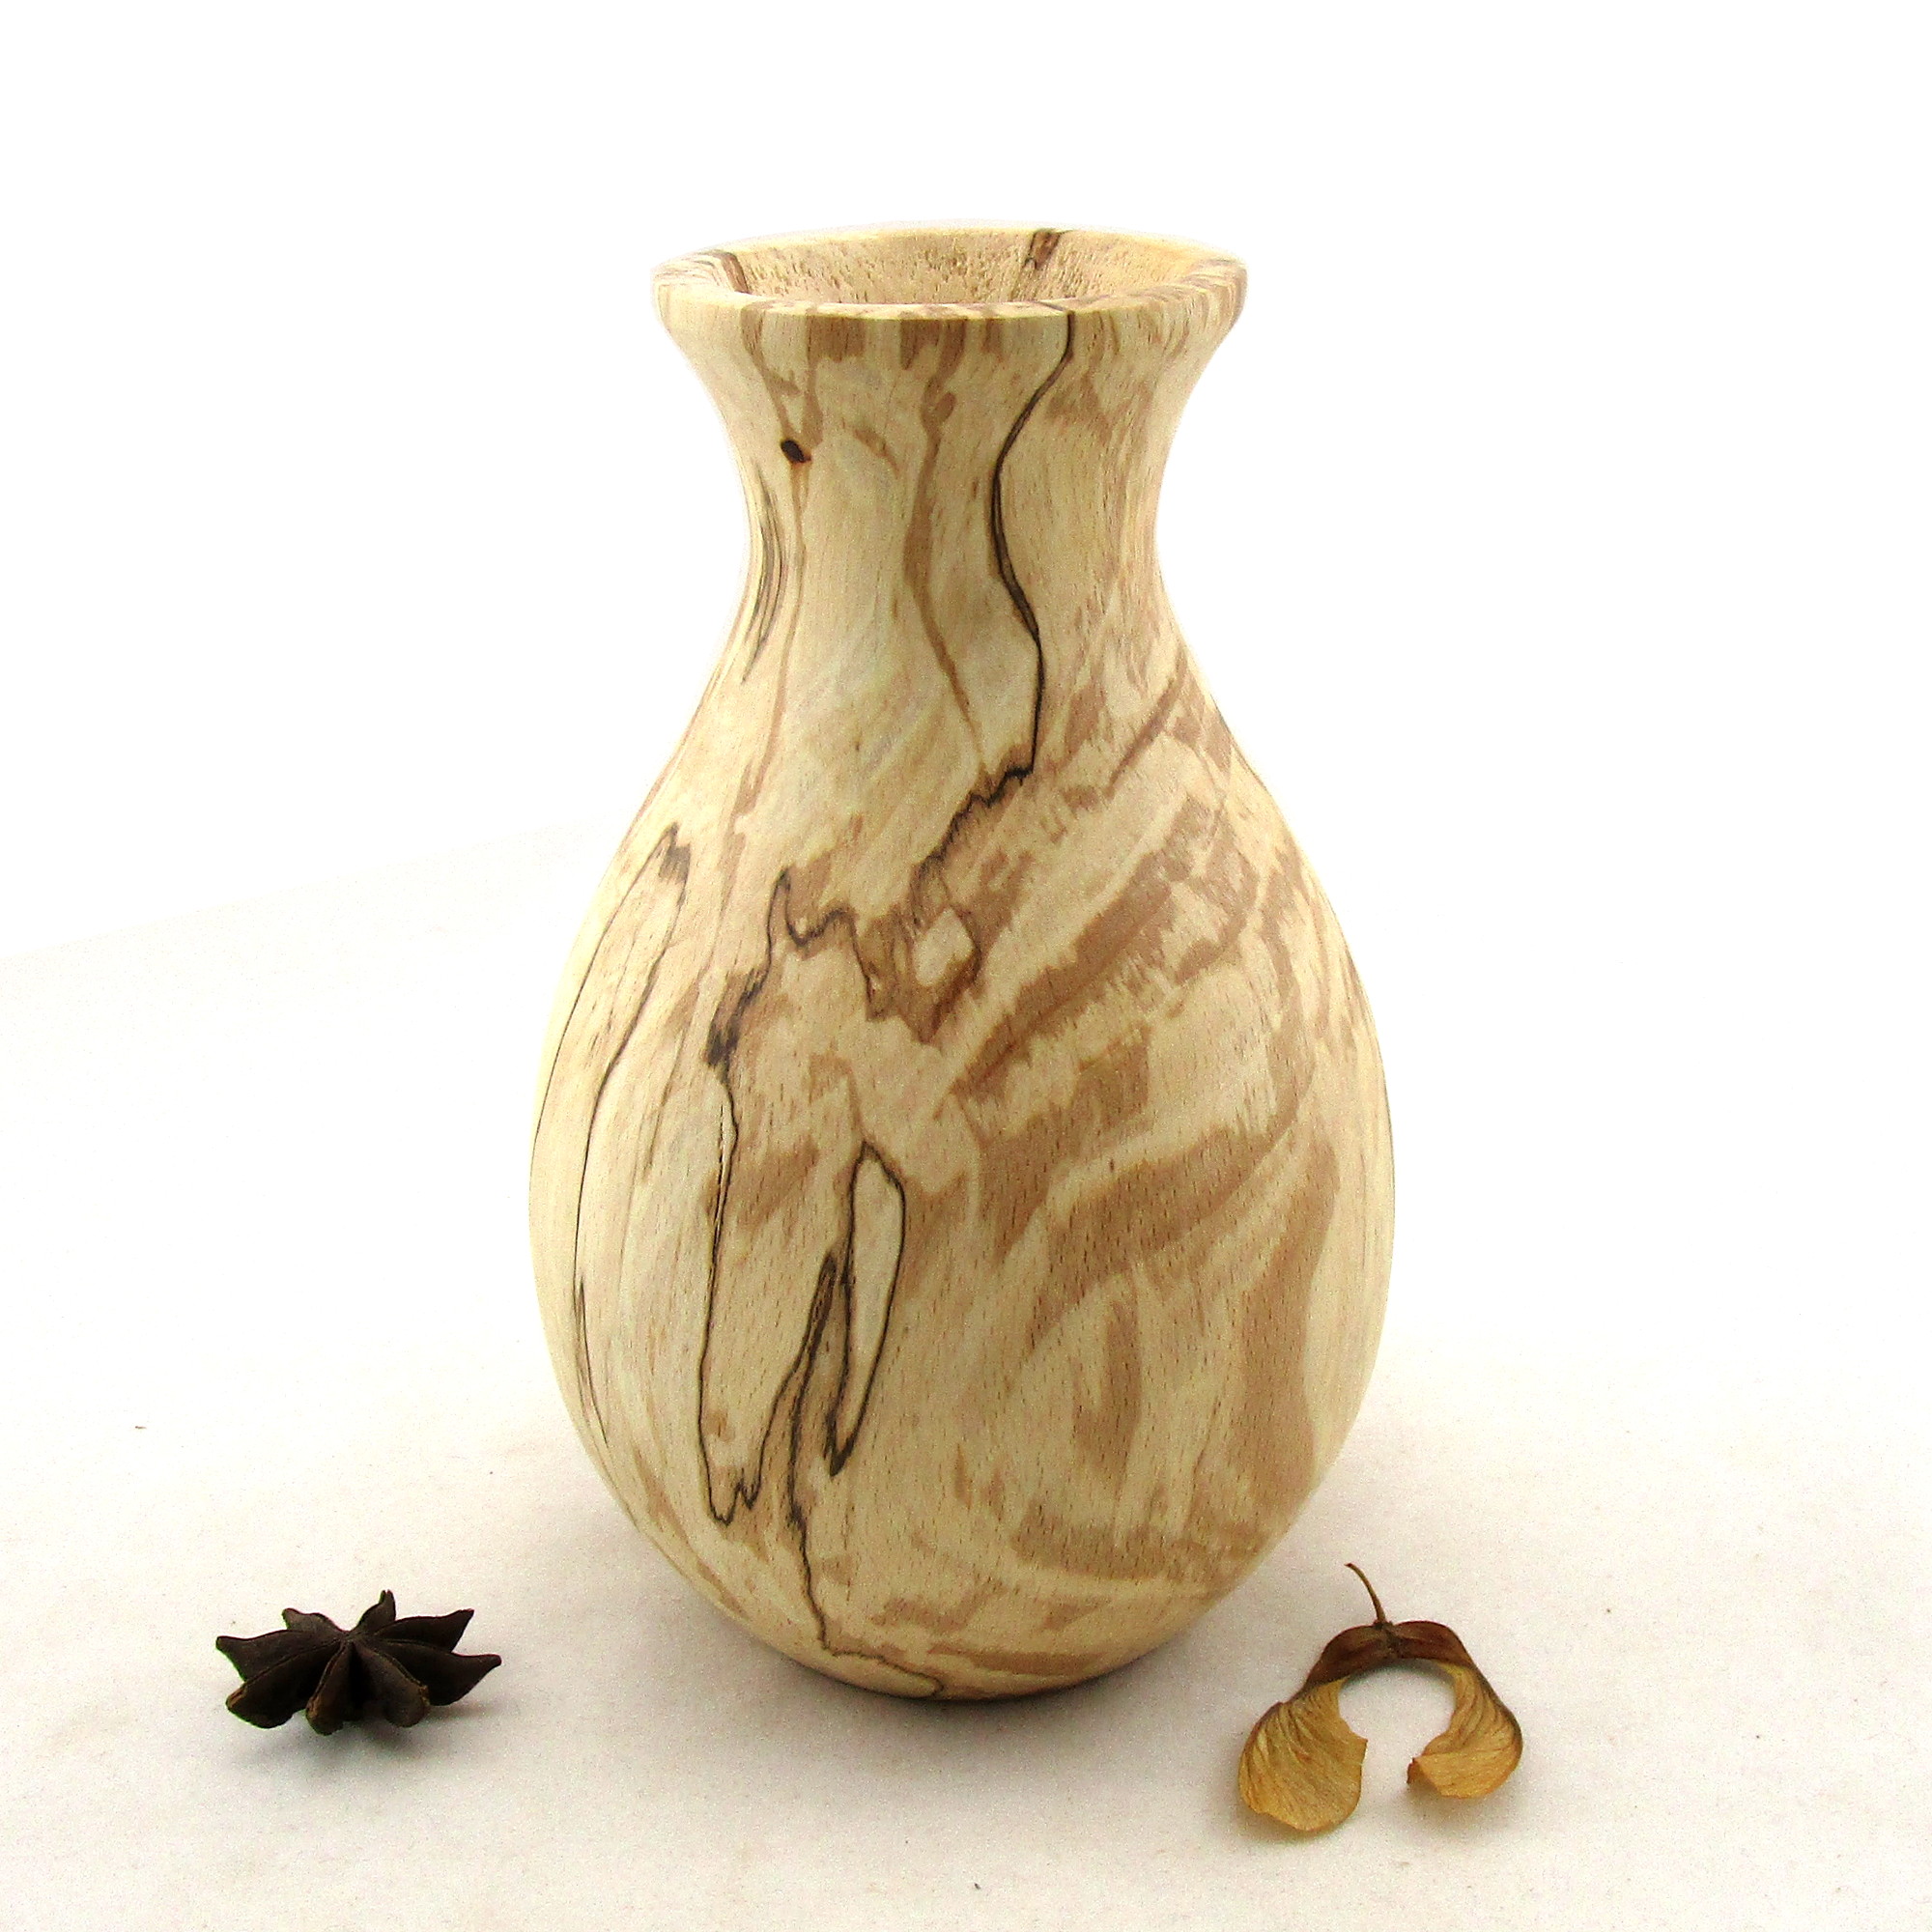 Vasi in legno, tornitura vasi di legno, vasi di legno fatti a mano, vasi decorativi